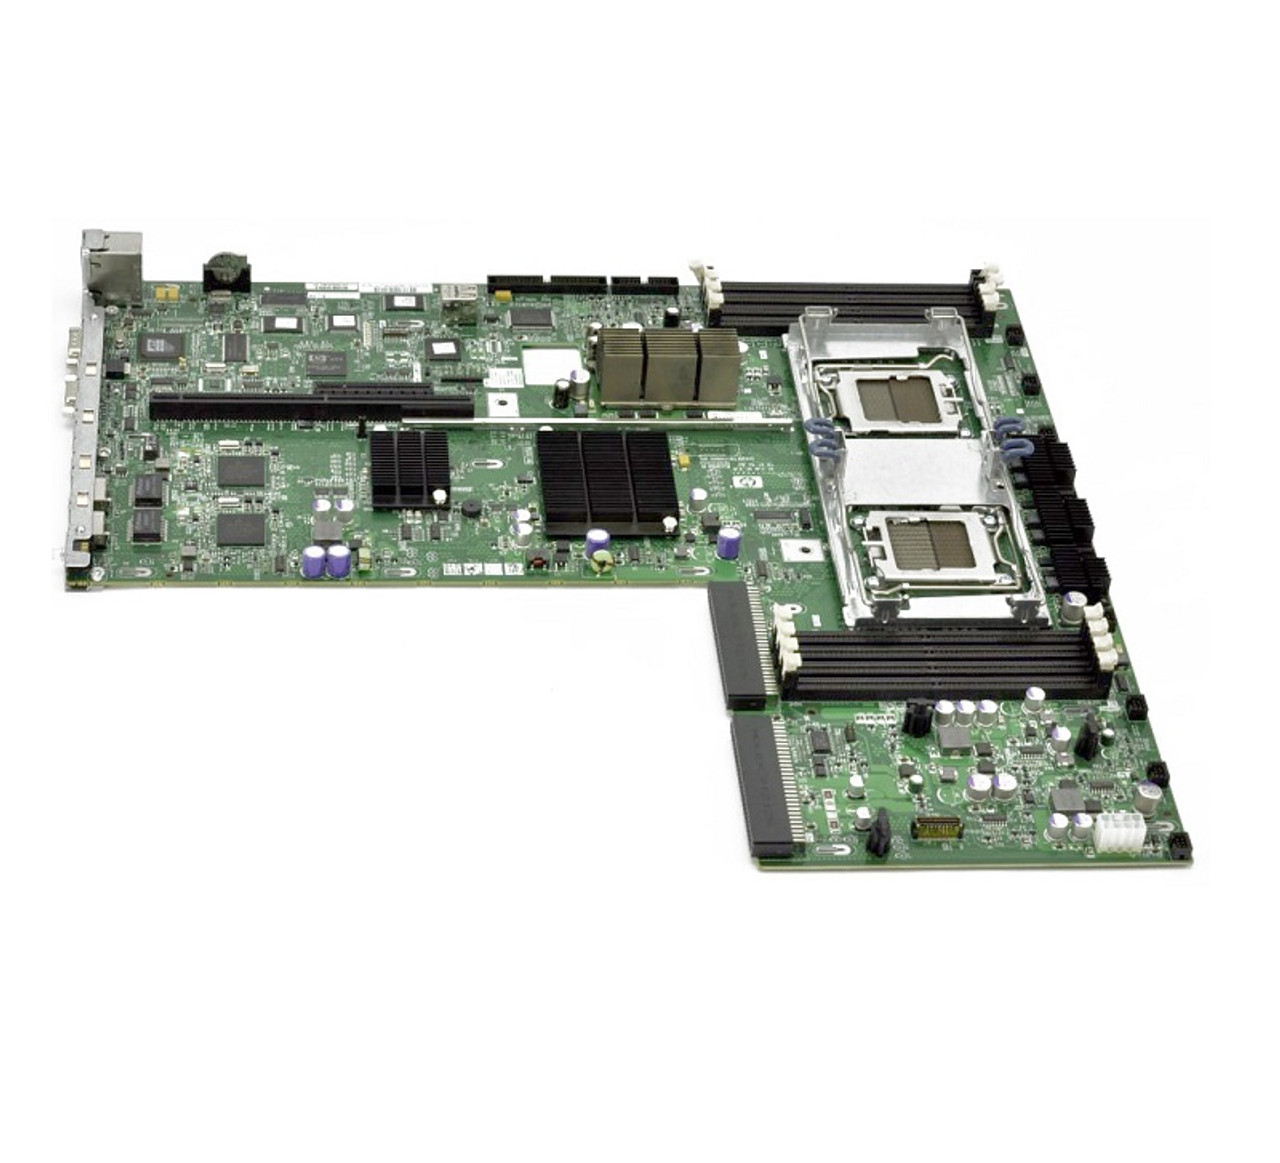 313025-001 - HP System I/O Board (Motherboard) ATA-533 for HP Proliant ML310 G1 (Refurbished)